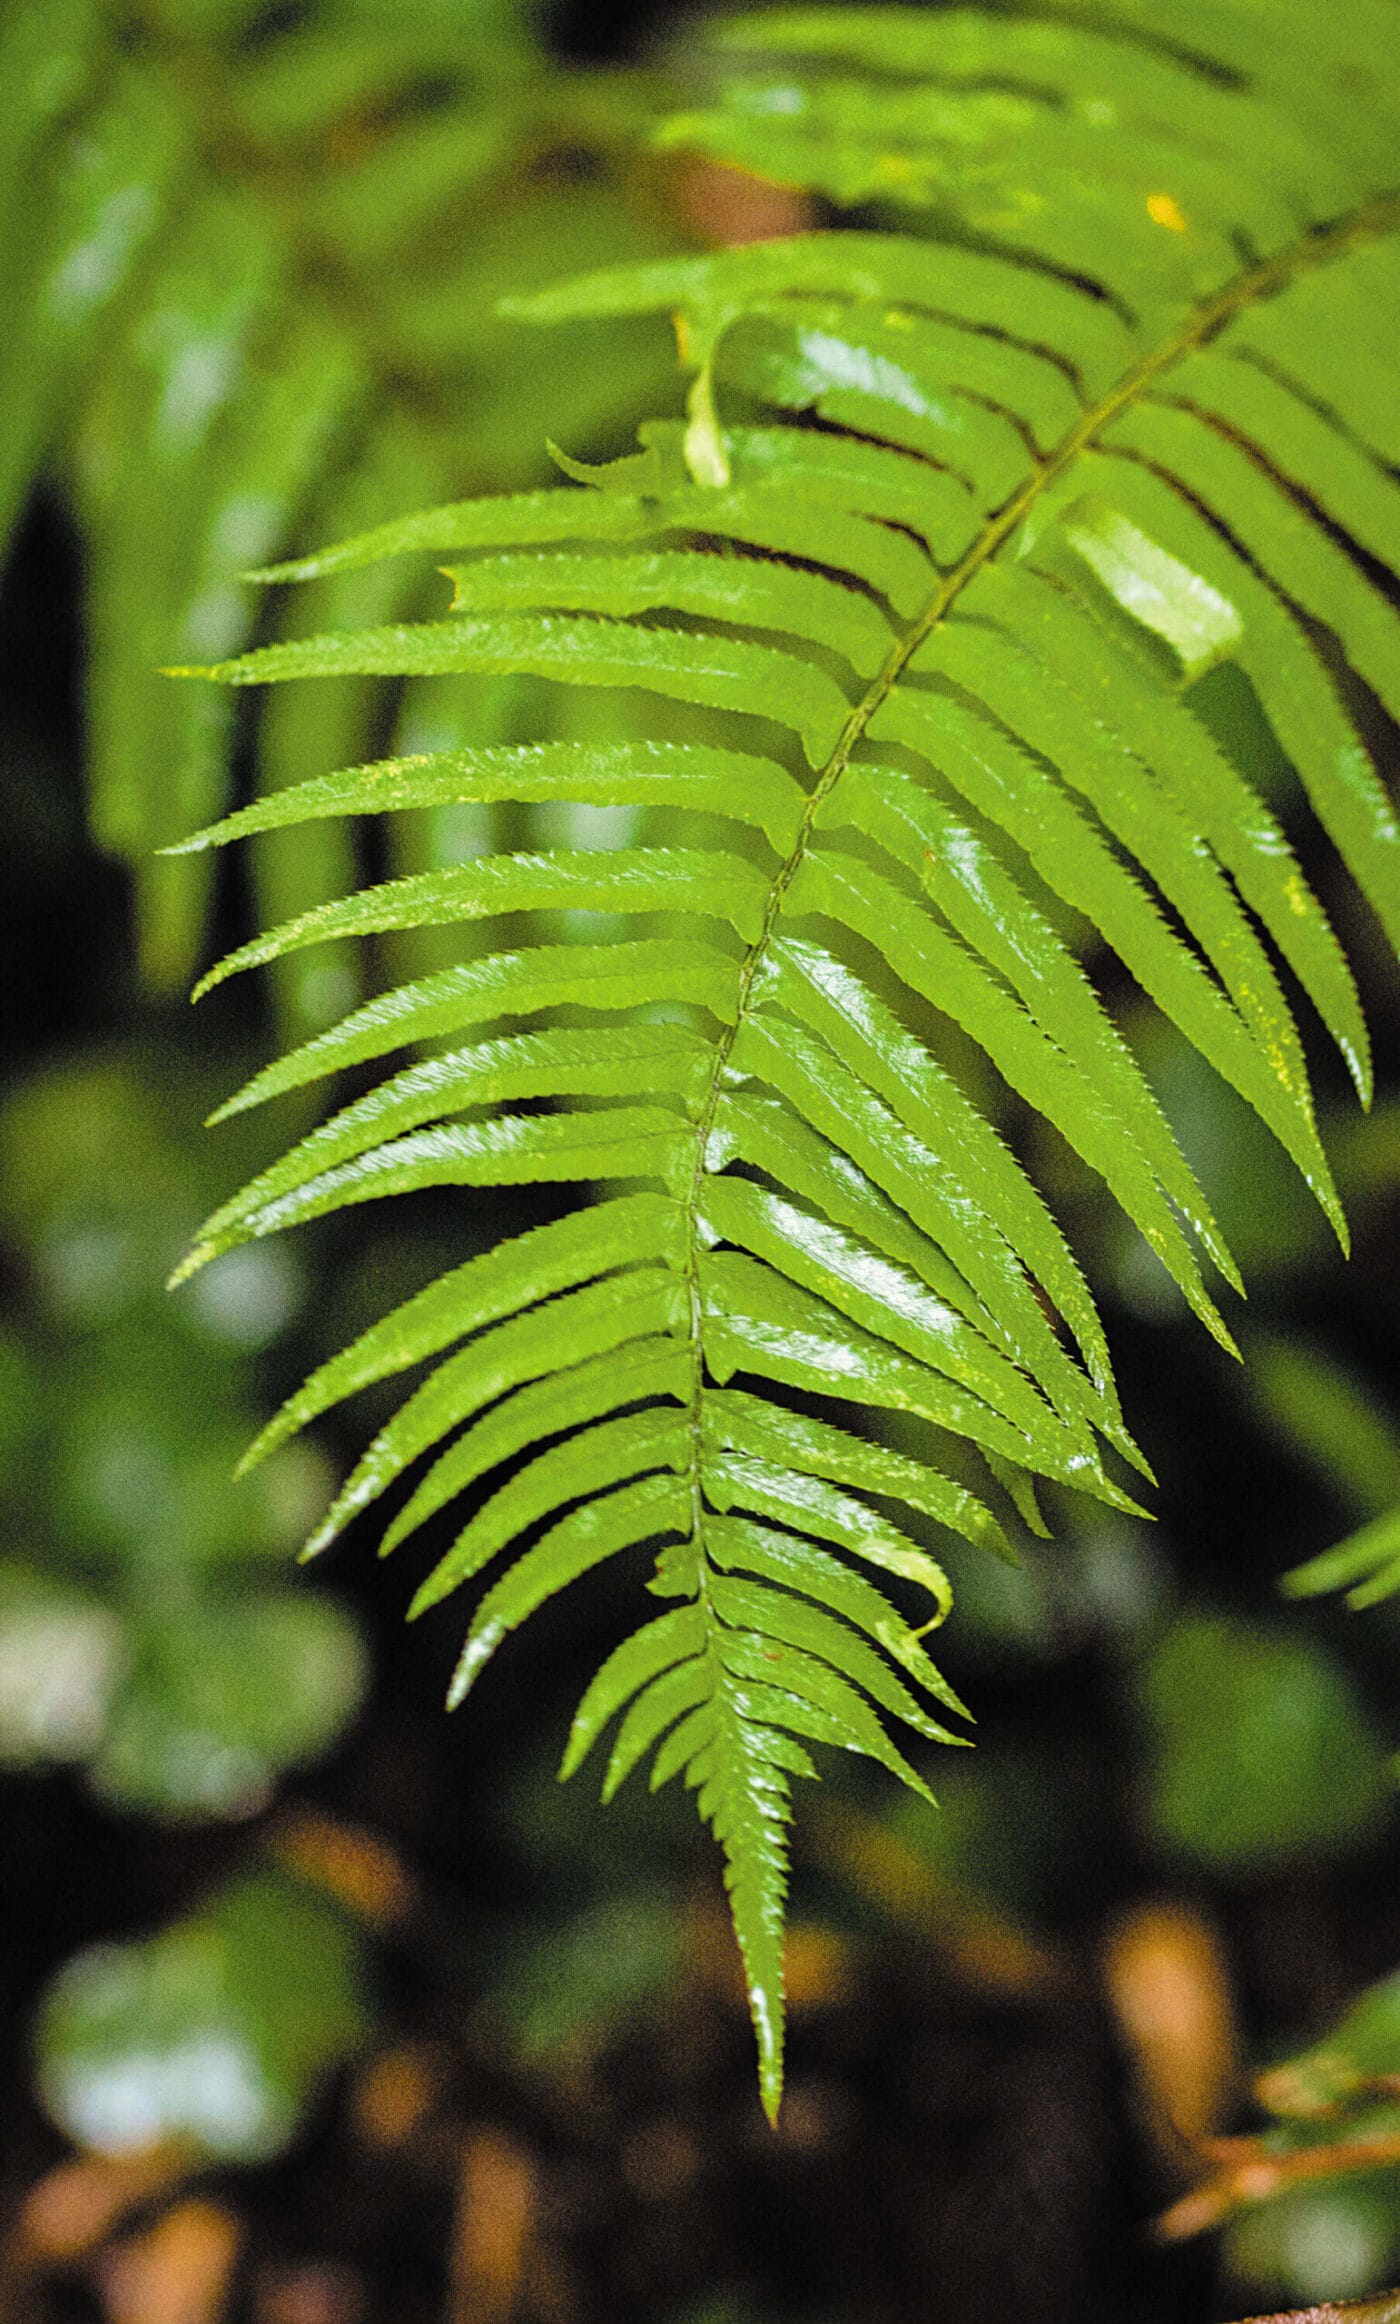 A close up of a green fern leaf.